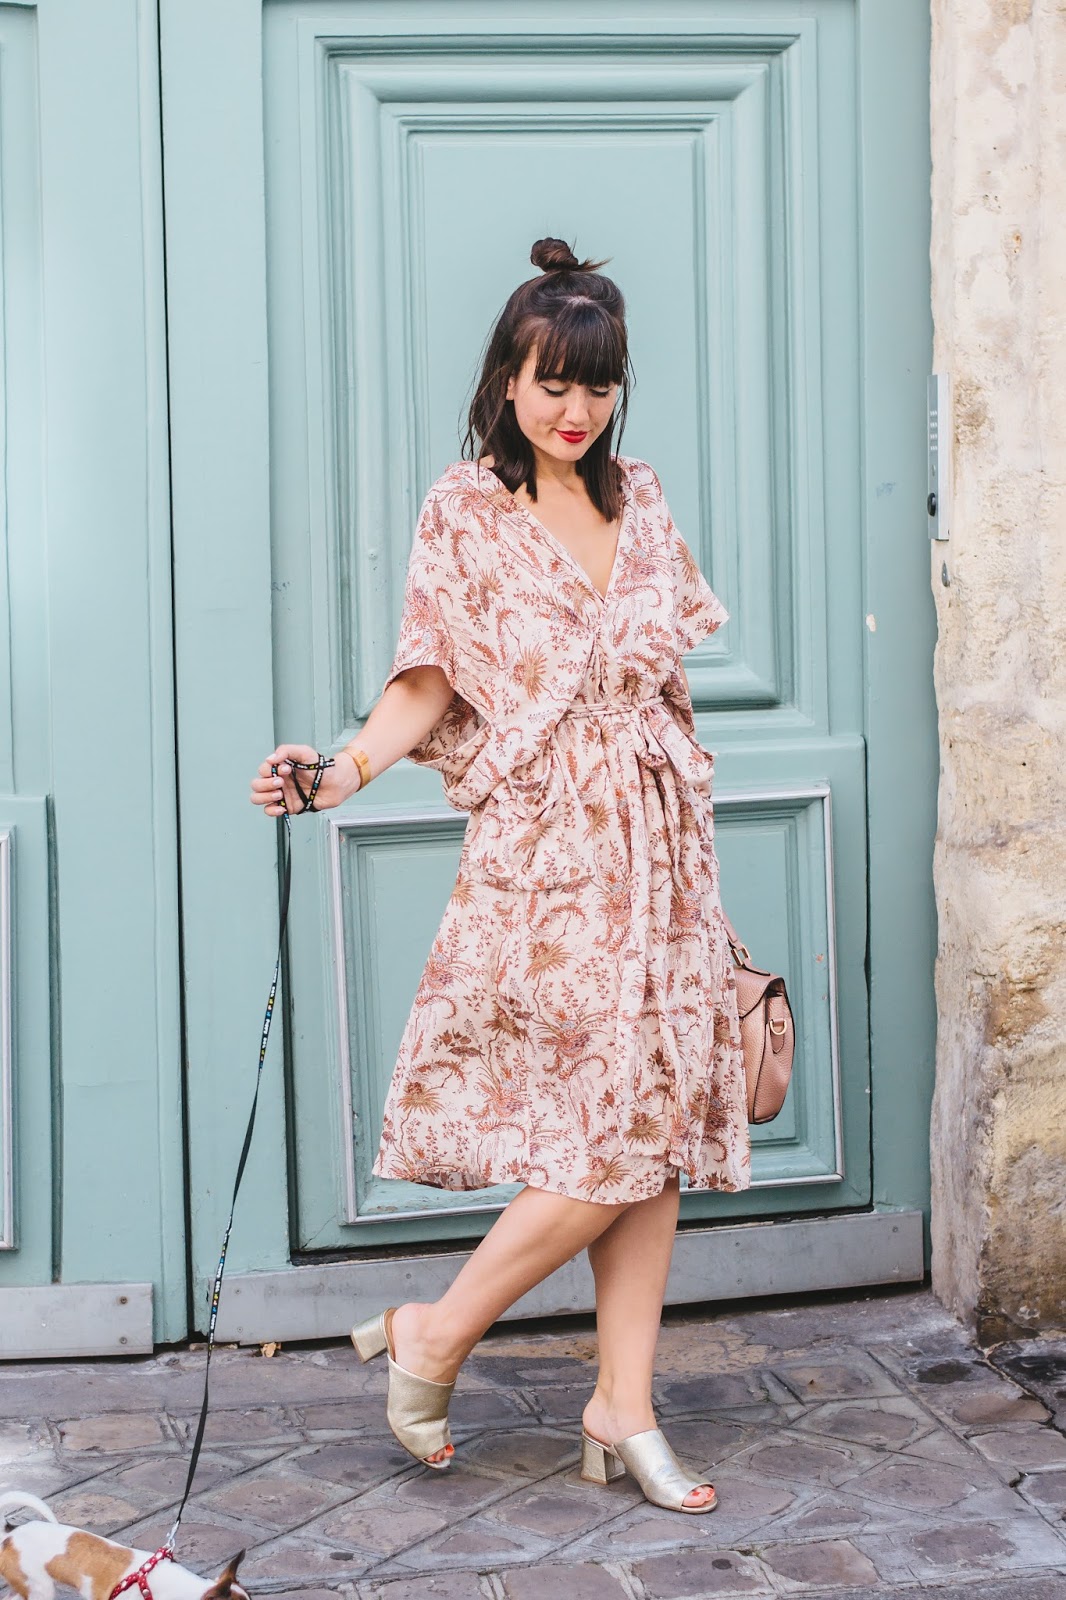 paris-fashionblogger-look-style-mode-parisianfashionblogger-streetstye-summerstyle